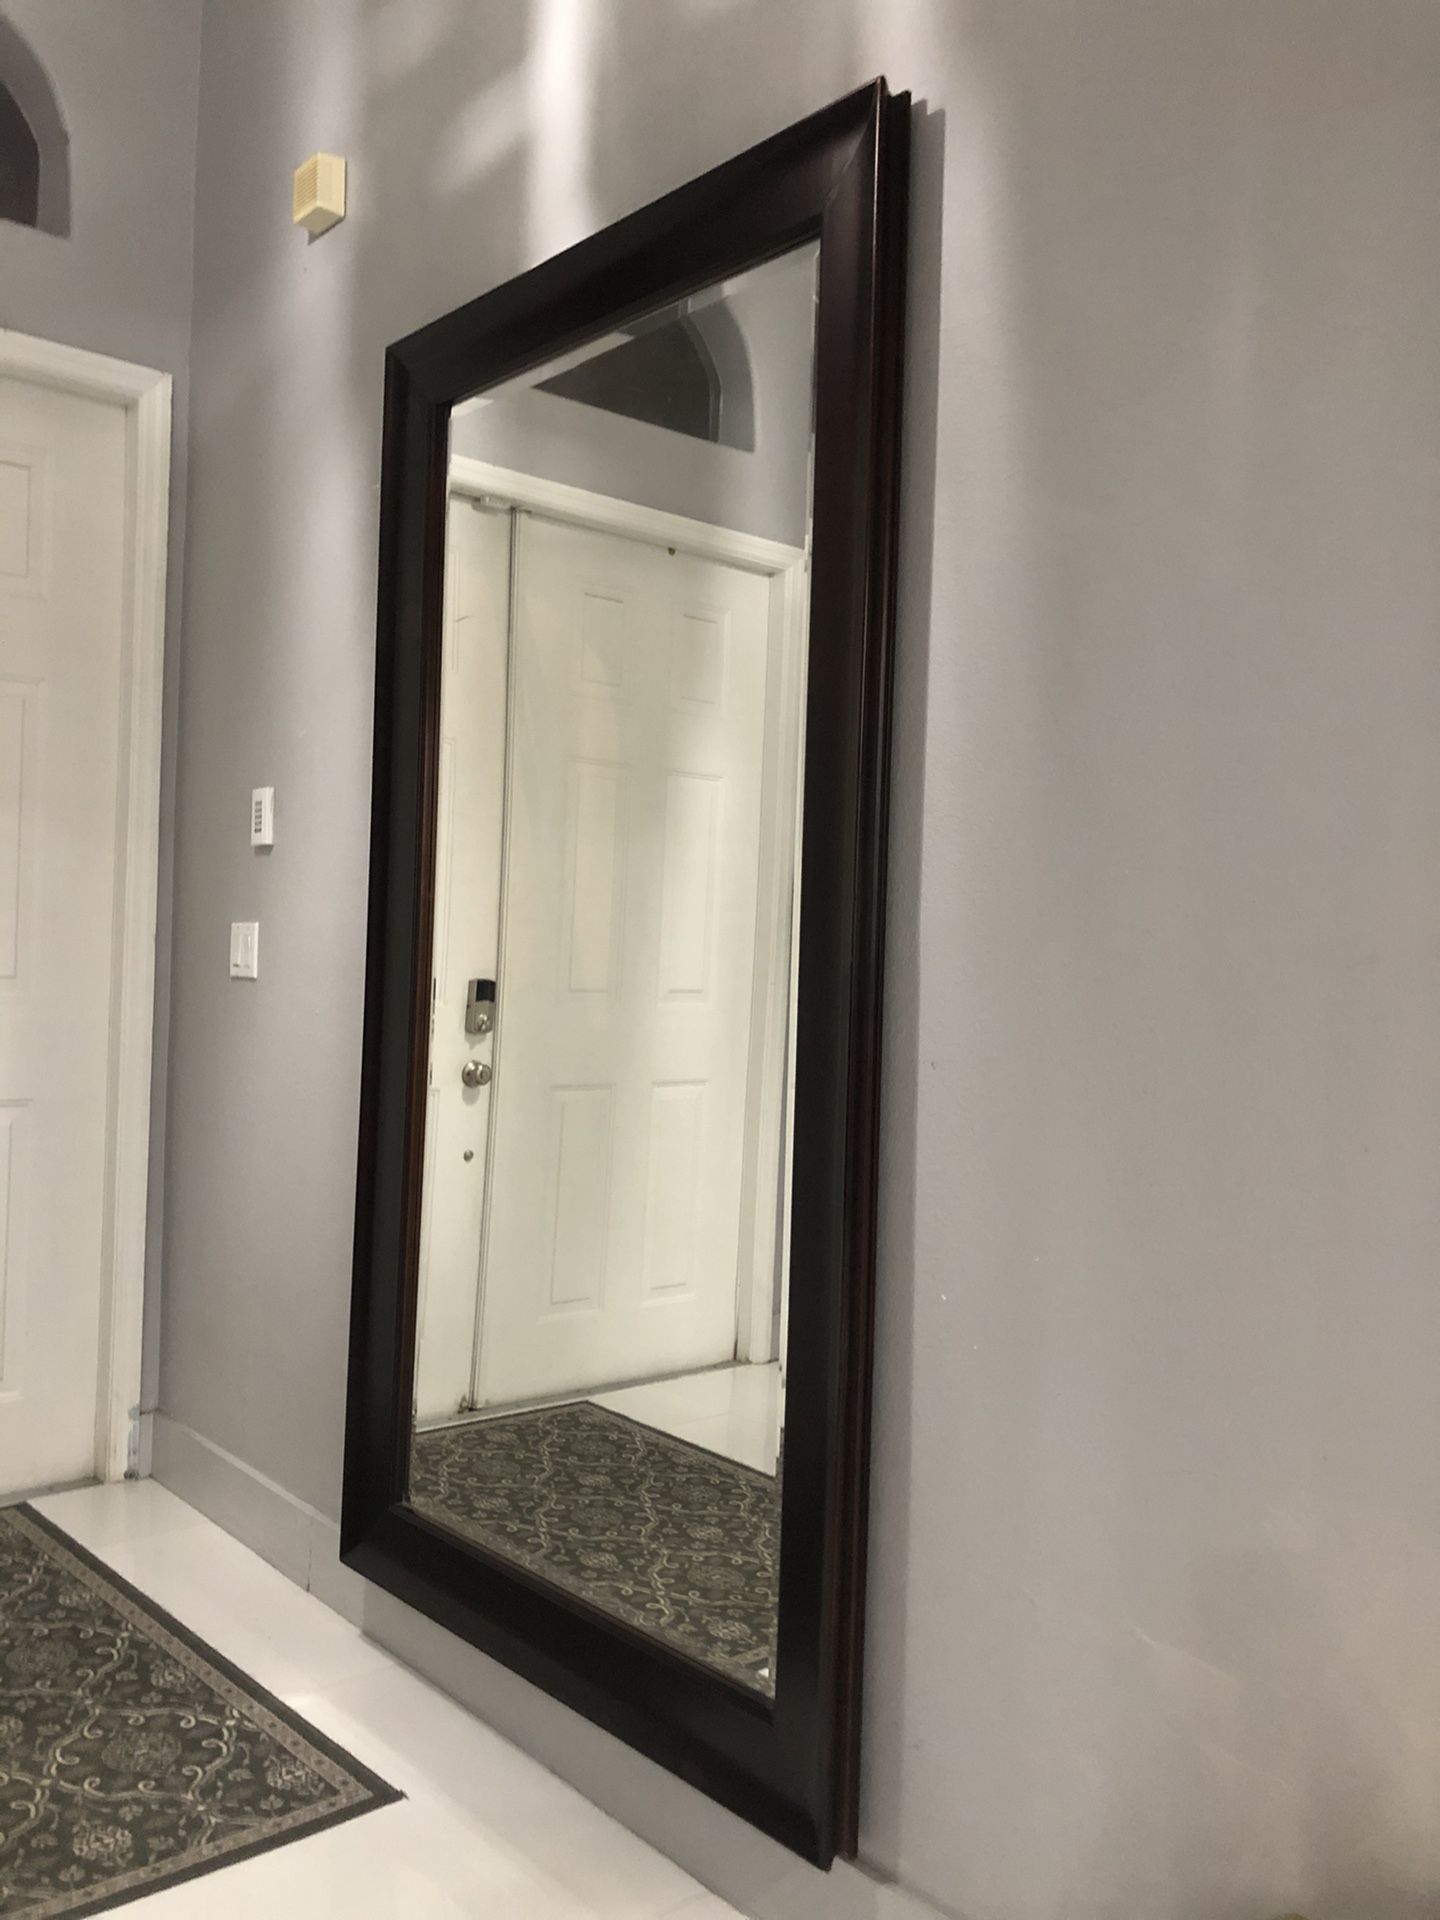 Wall Mirror. 7ft x 3’10